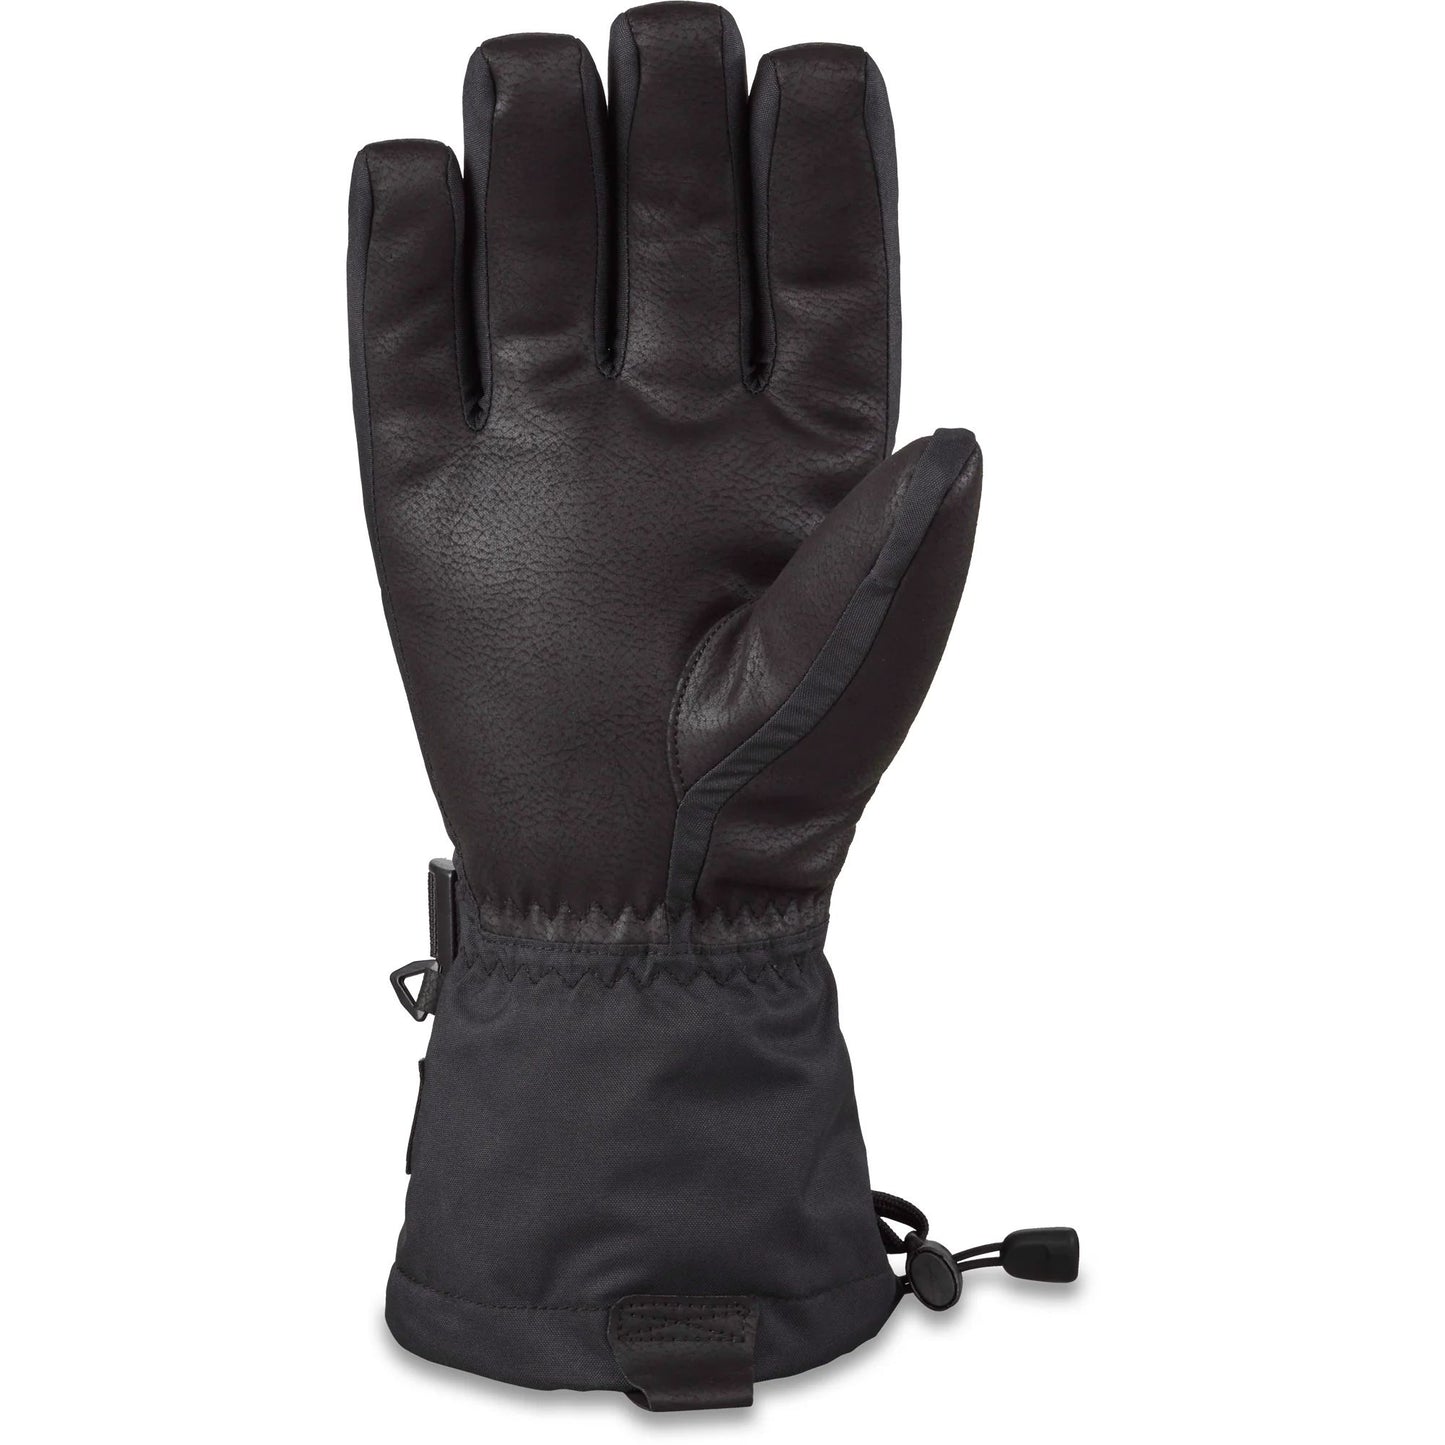 Dakine Nova Glove - Dakine Snow Gloves